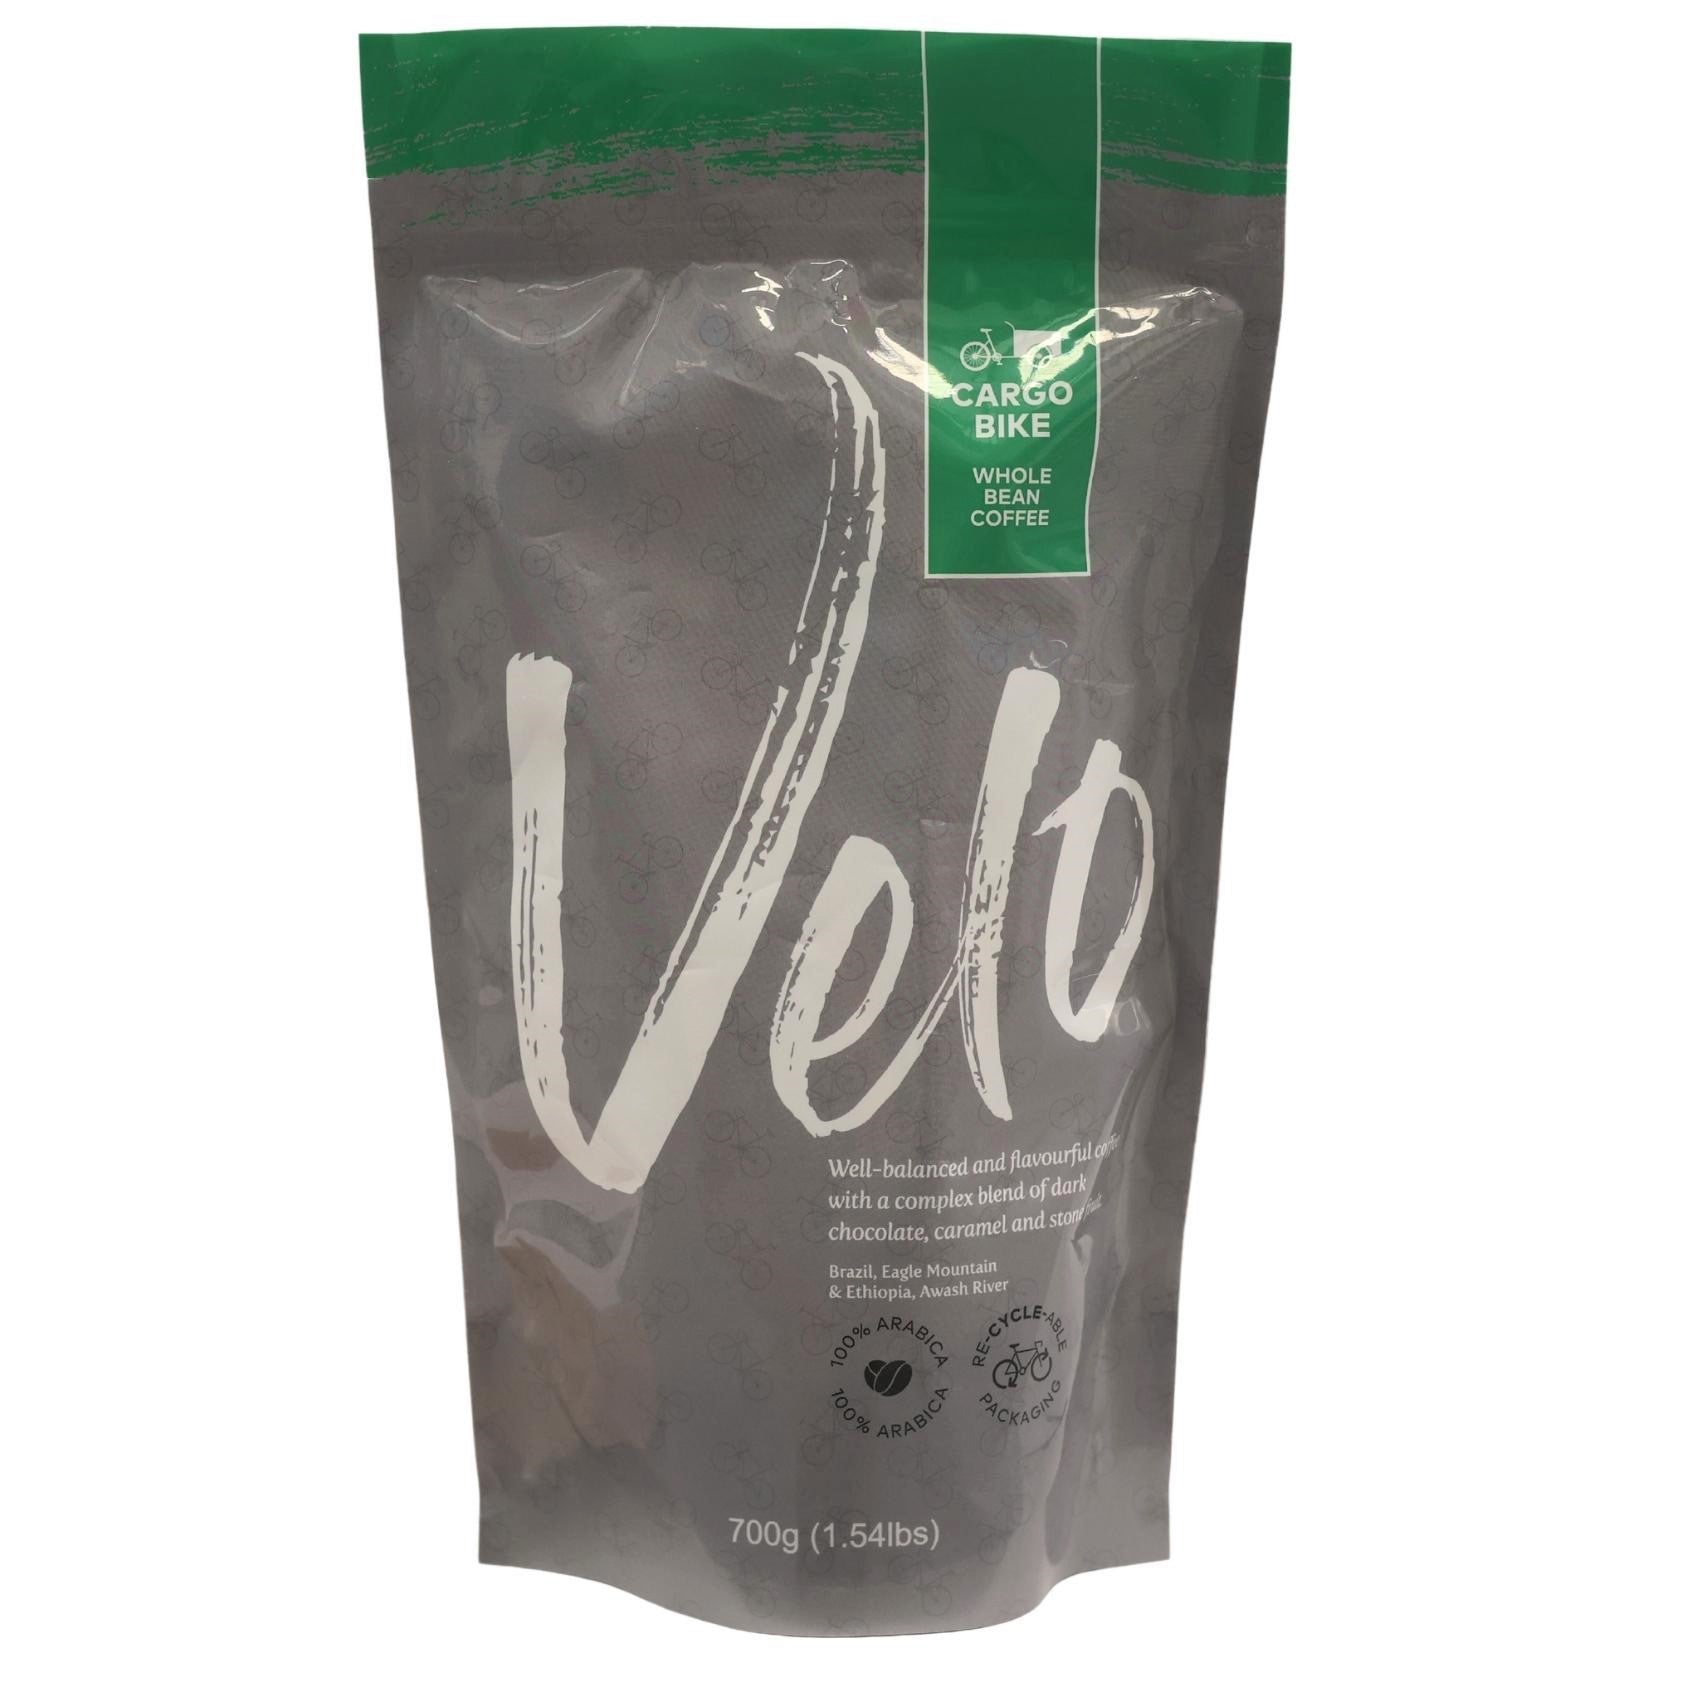 Velo Coffee Roasters - Cargo Bike 700g Coffee Bag Brazil and Ethiopia Coffee Blend - Grey bag with Green Strip across Top Whole Bean - Velo Coffee Roasters